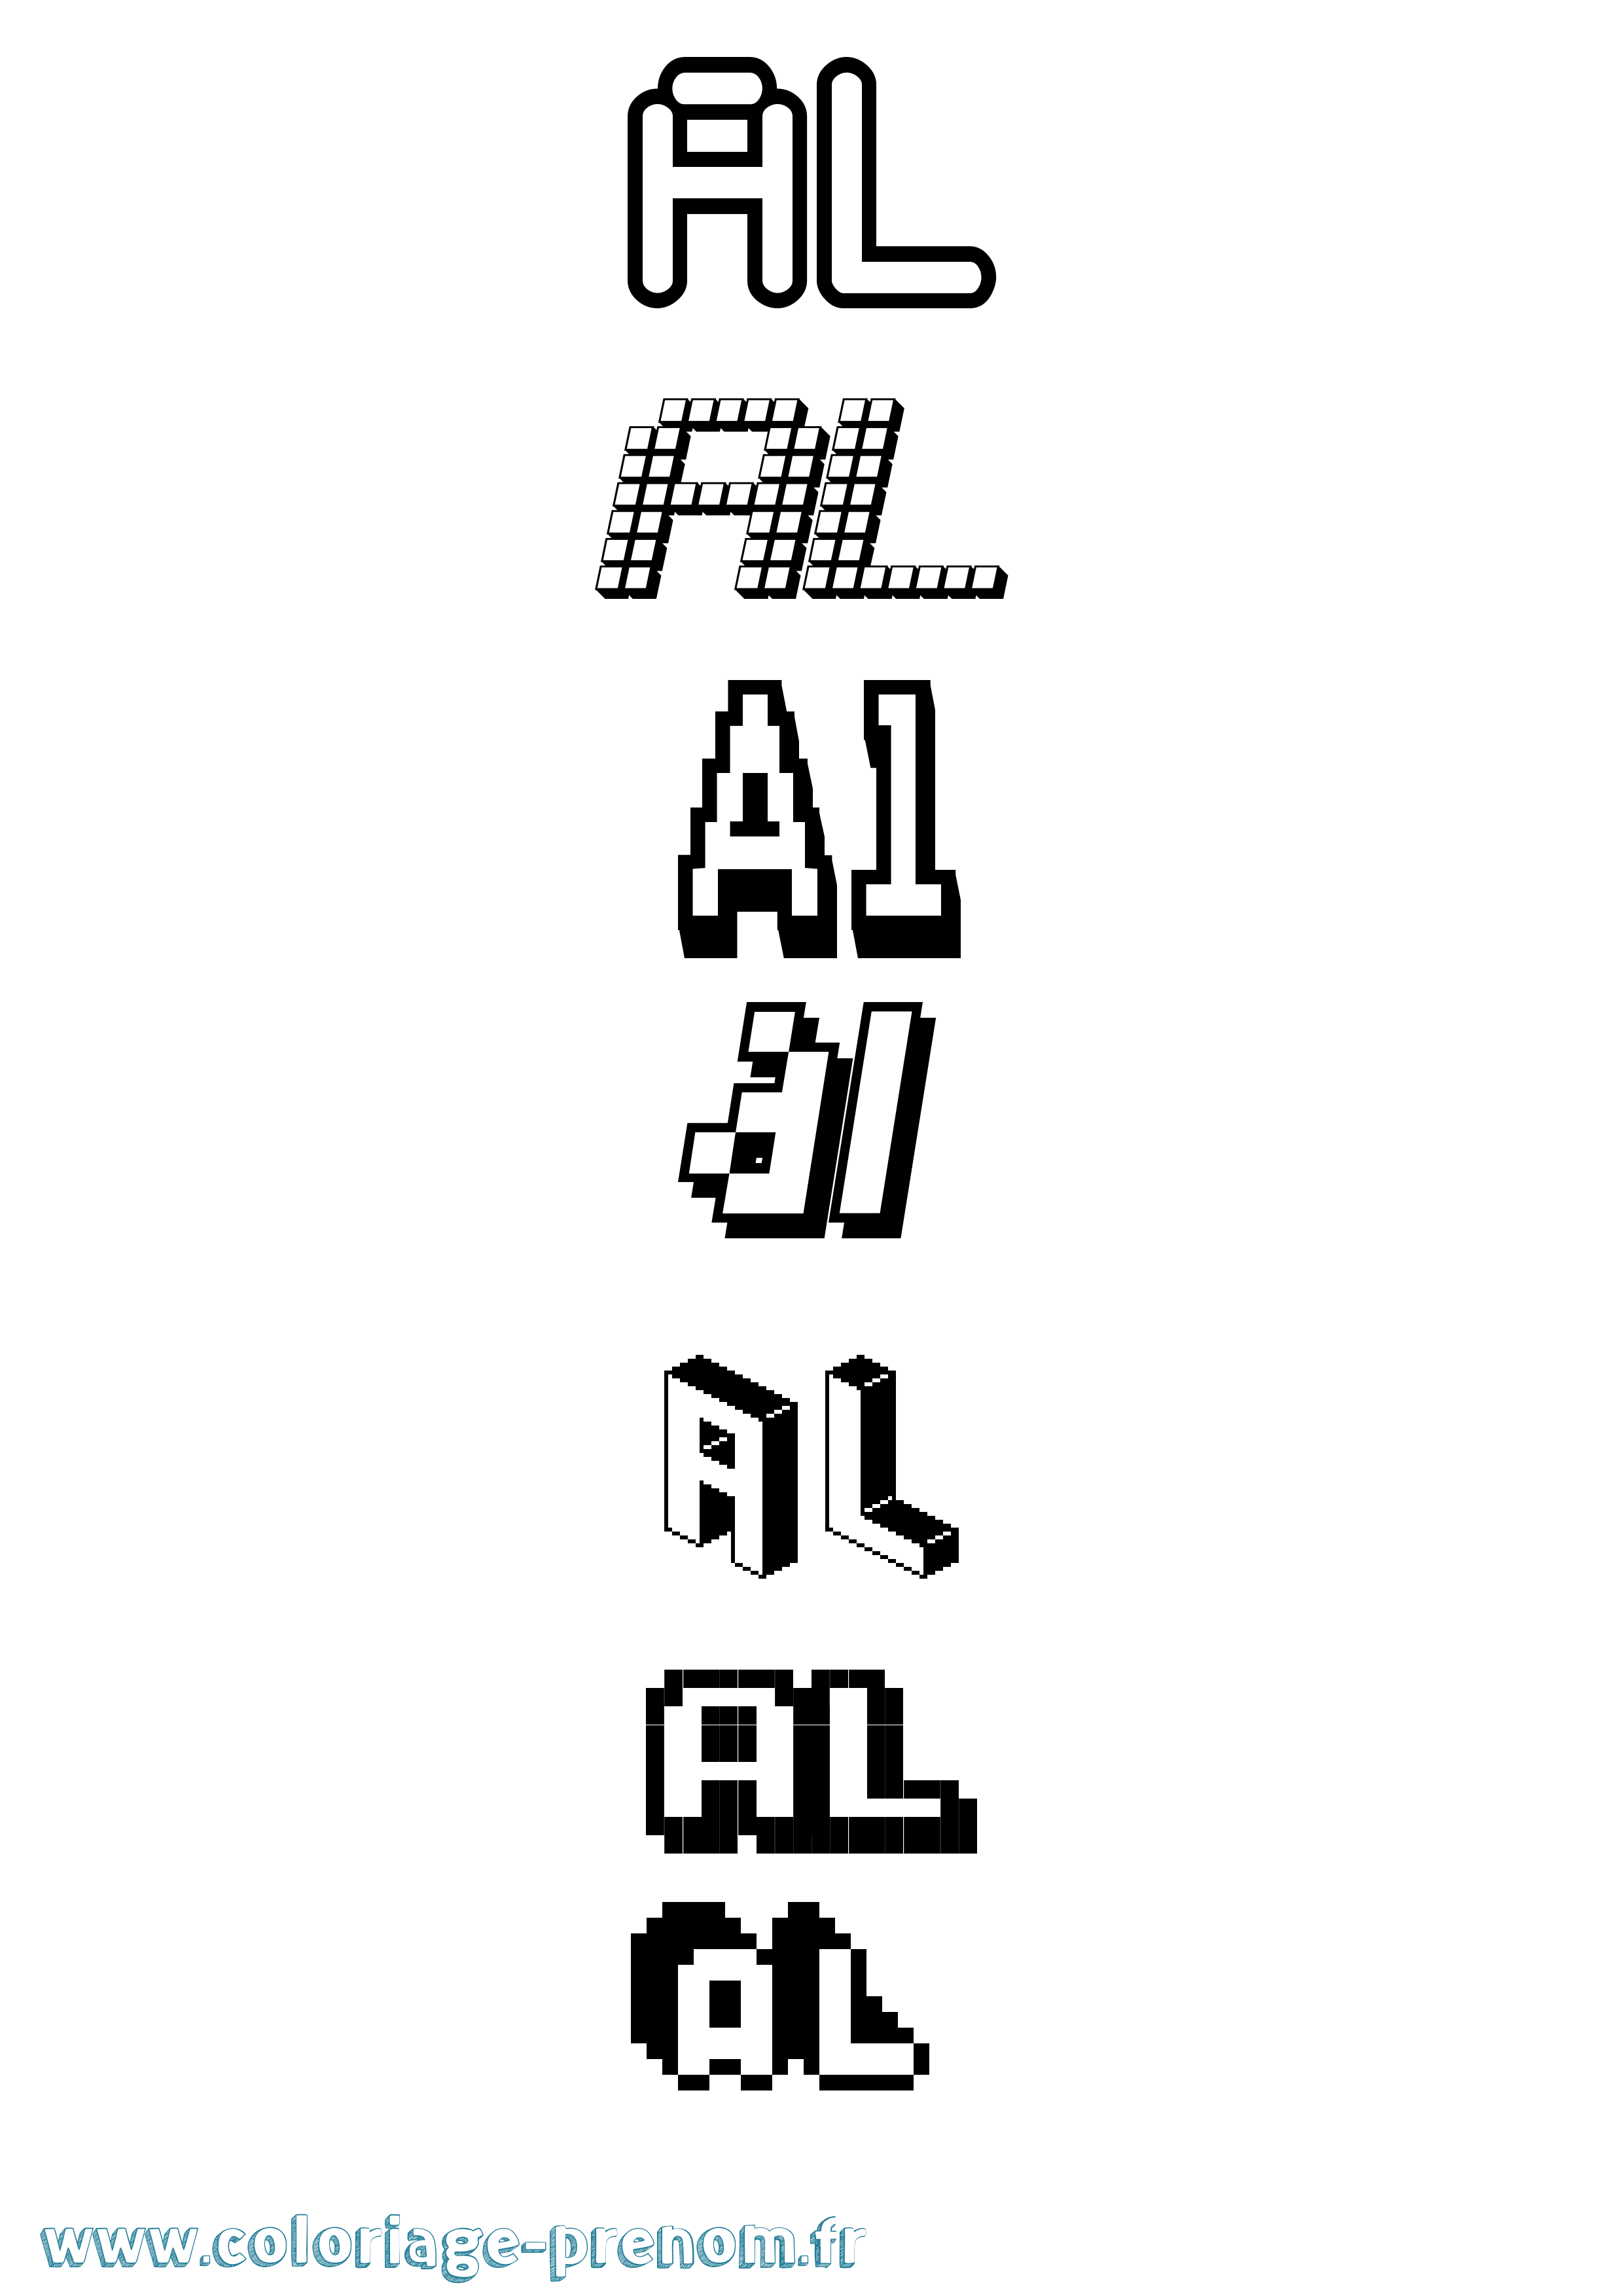 Coloriage prénom Al Pixel